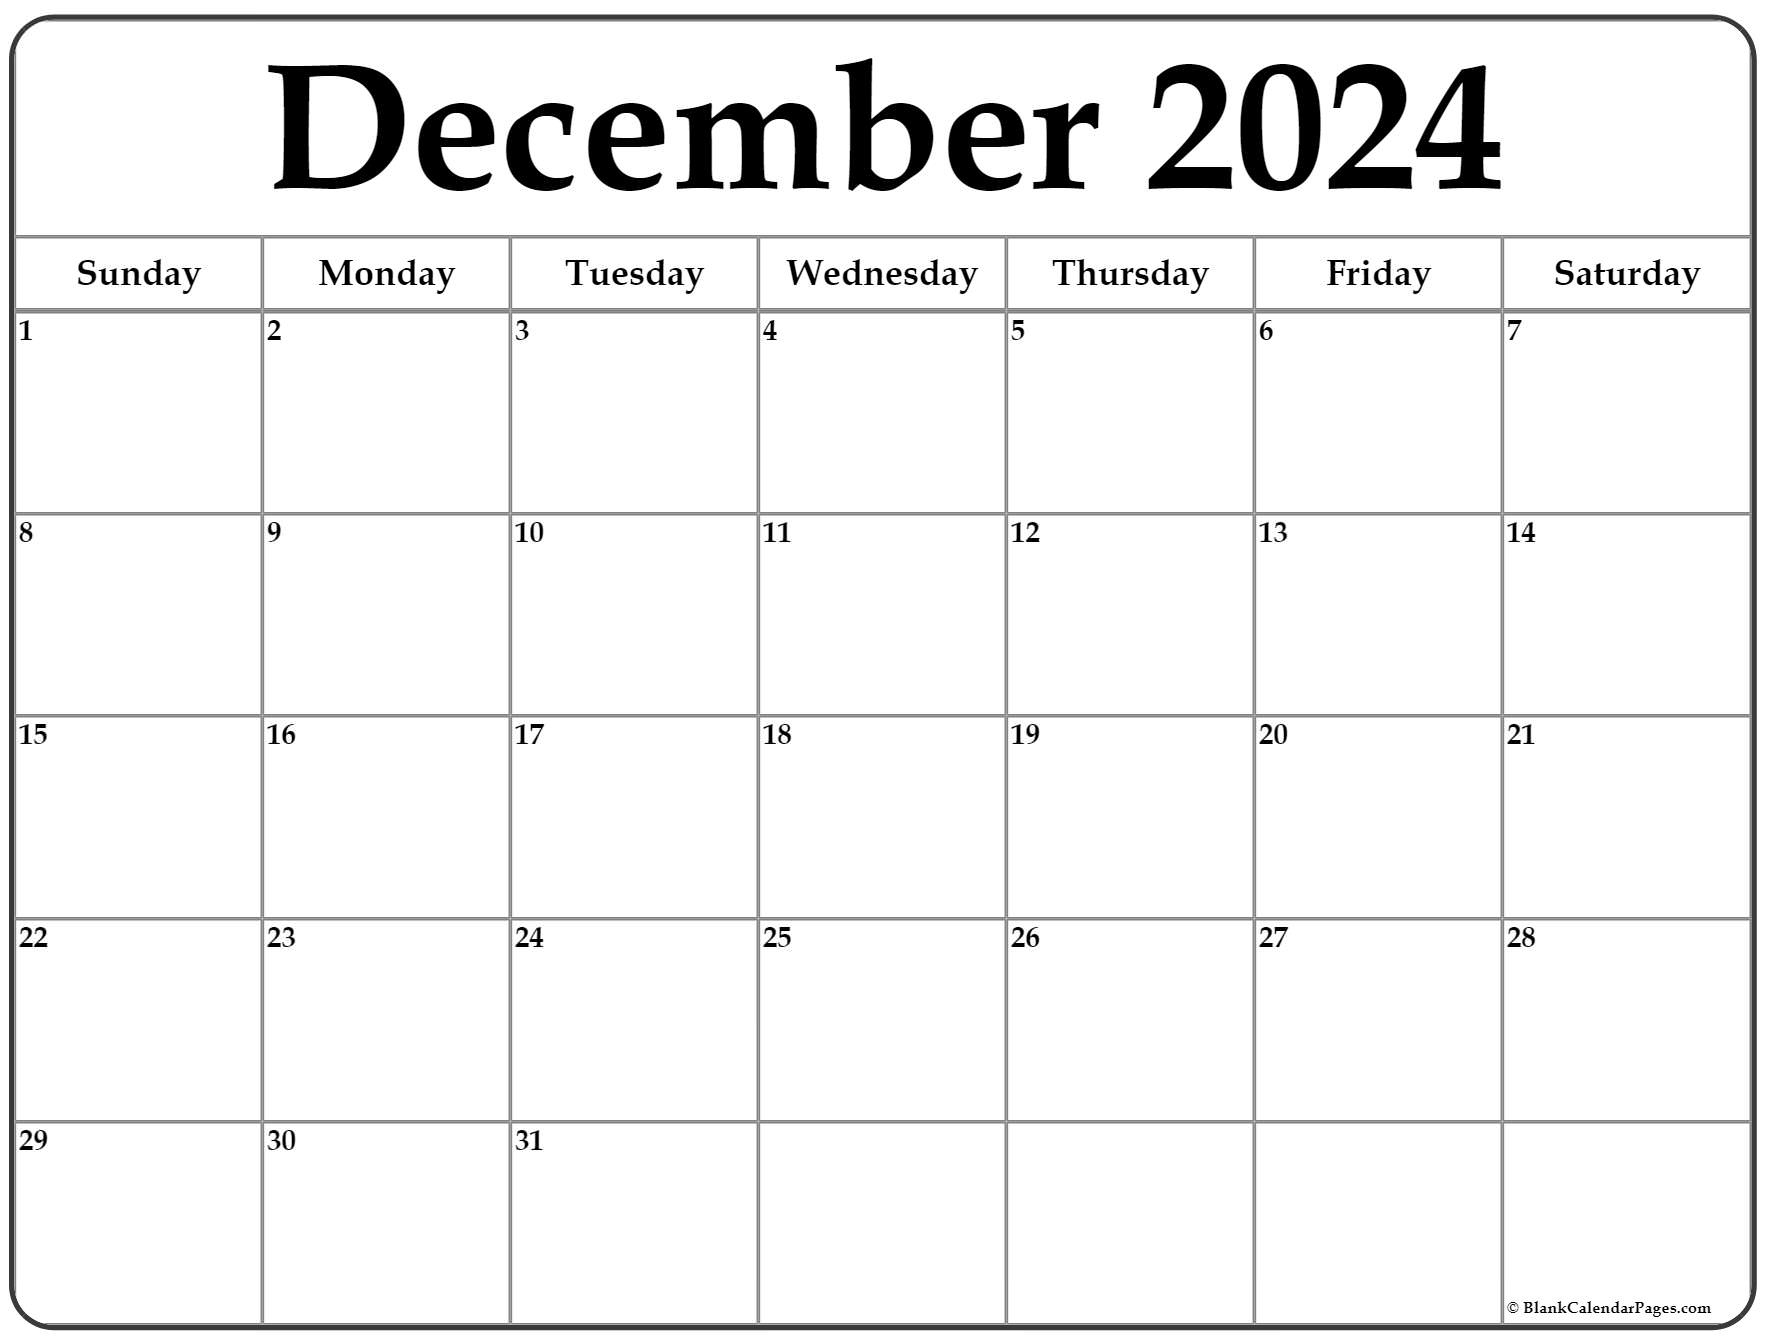 Dec 2024 Calendar Template Free Chere Deeanne - Free Printable 2024 December Calender